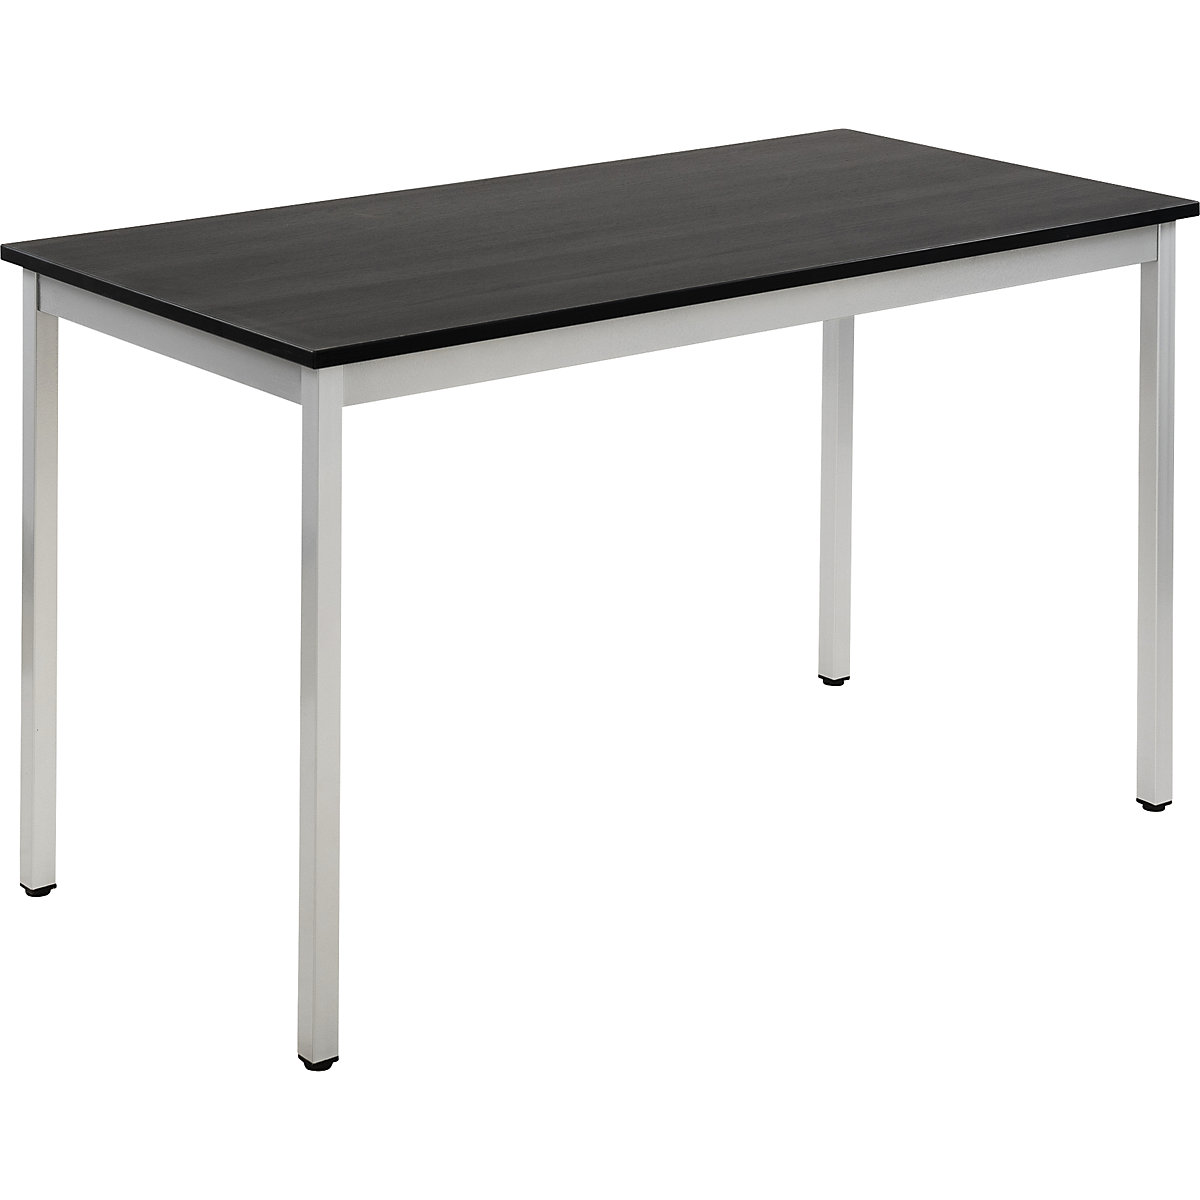 Multipurpose table – eurokraft basic, rectangular, WxH 1200 x 740 mm, depth 600 mm, ash finish tabletop in dark grey, white aluminium frame-16